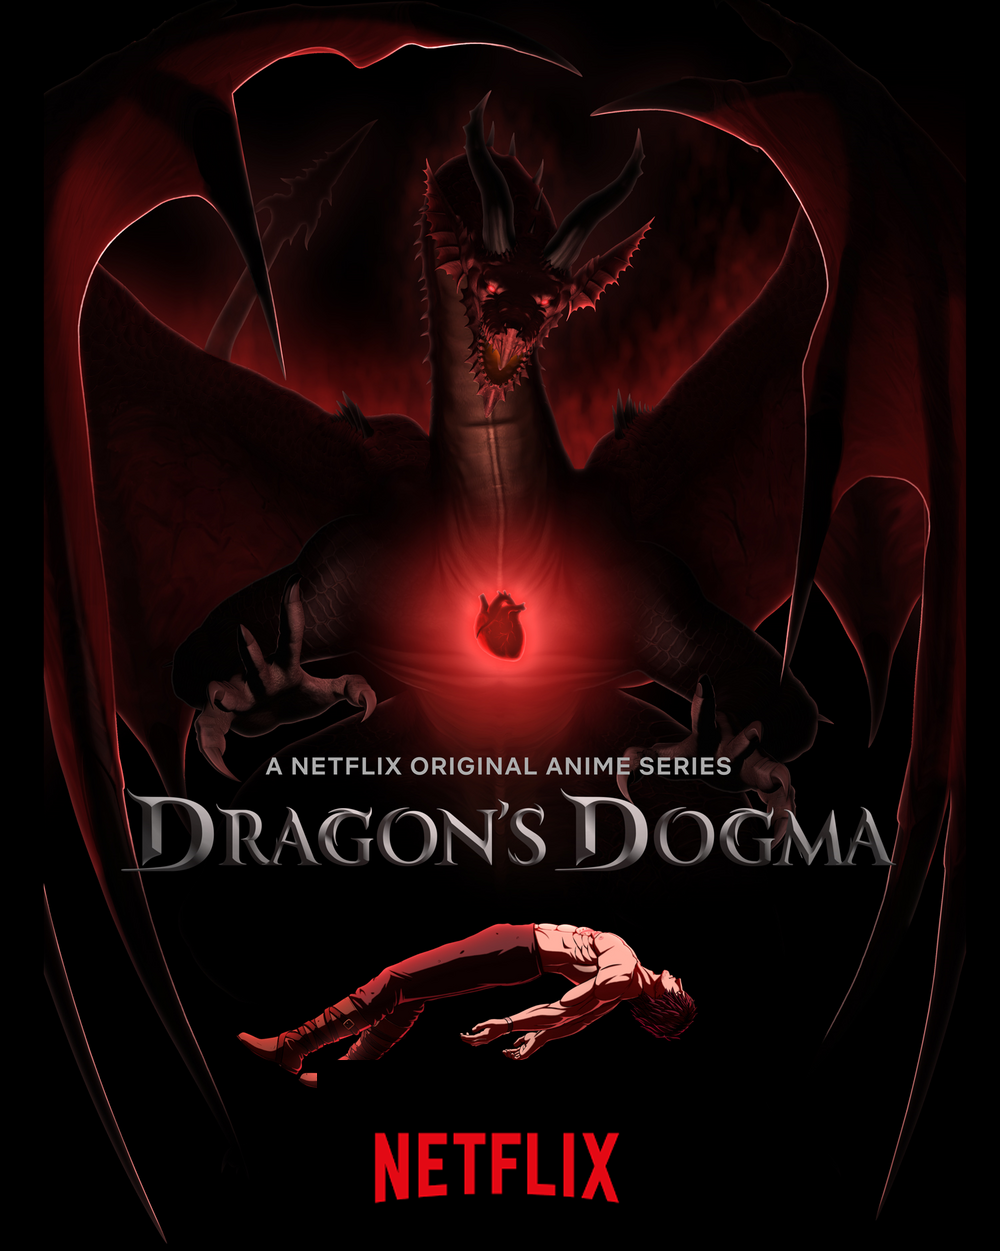 The Dragon's Dogma Netflix Anime Arrives This September